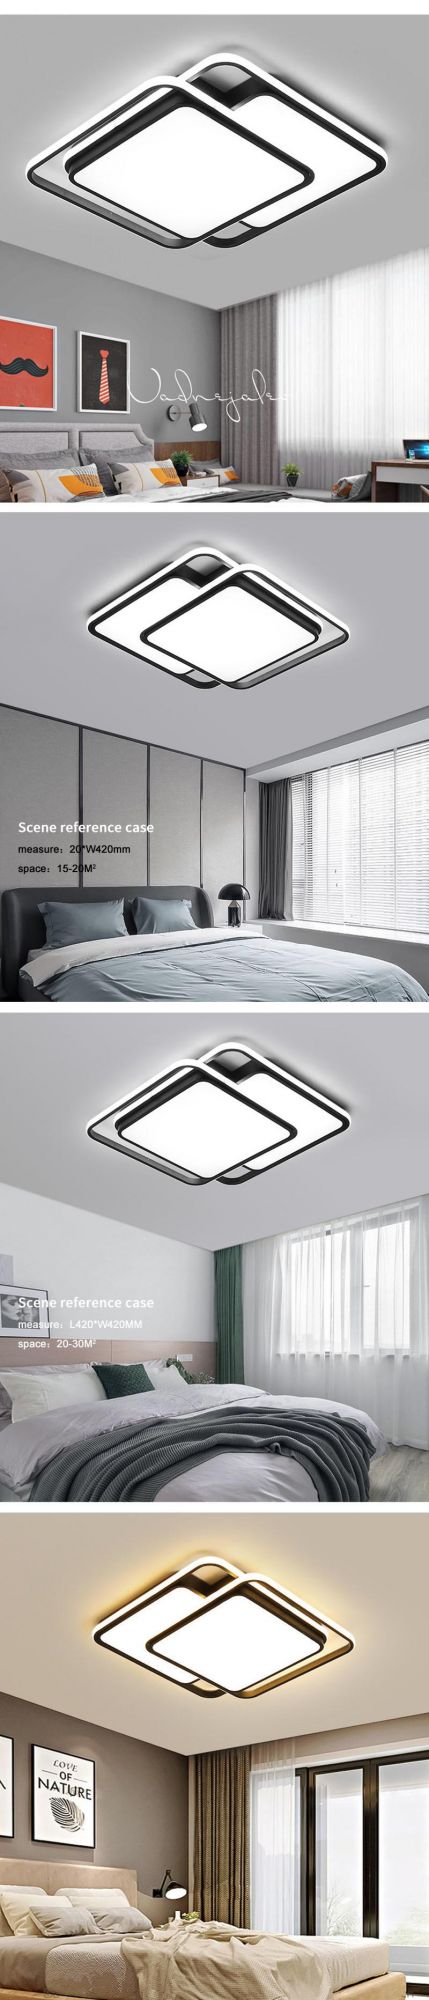 China Factory Wholesale Cheap Aluminum Warm White LED Light Source Modern Bedroom LED Hanging LED Ceiling Lighting